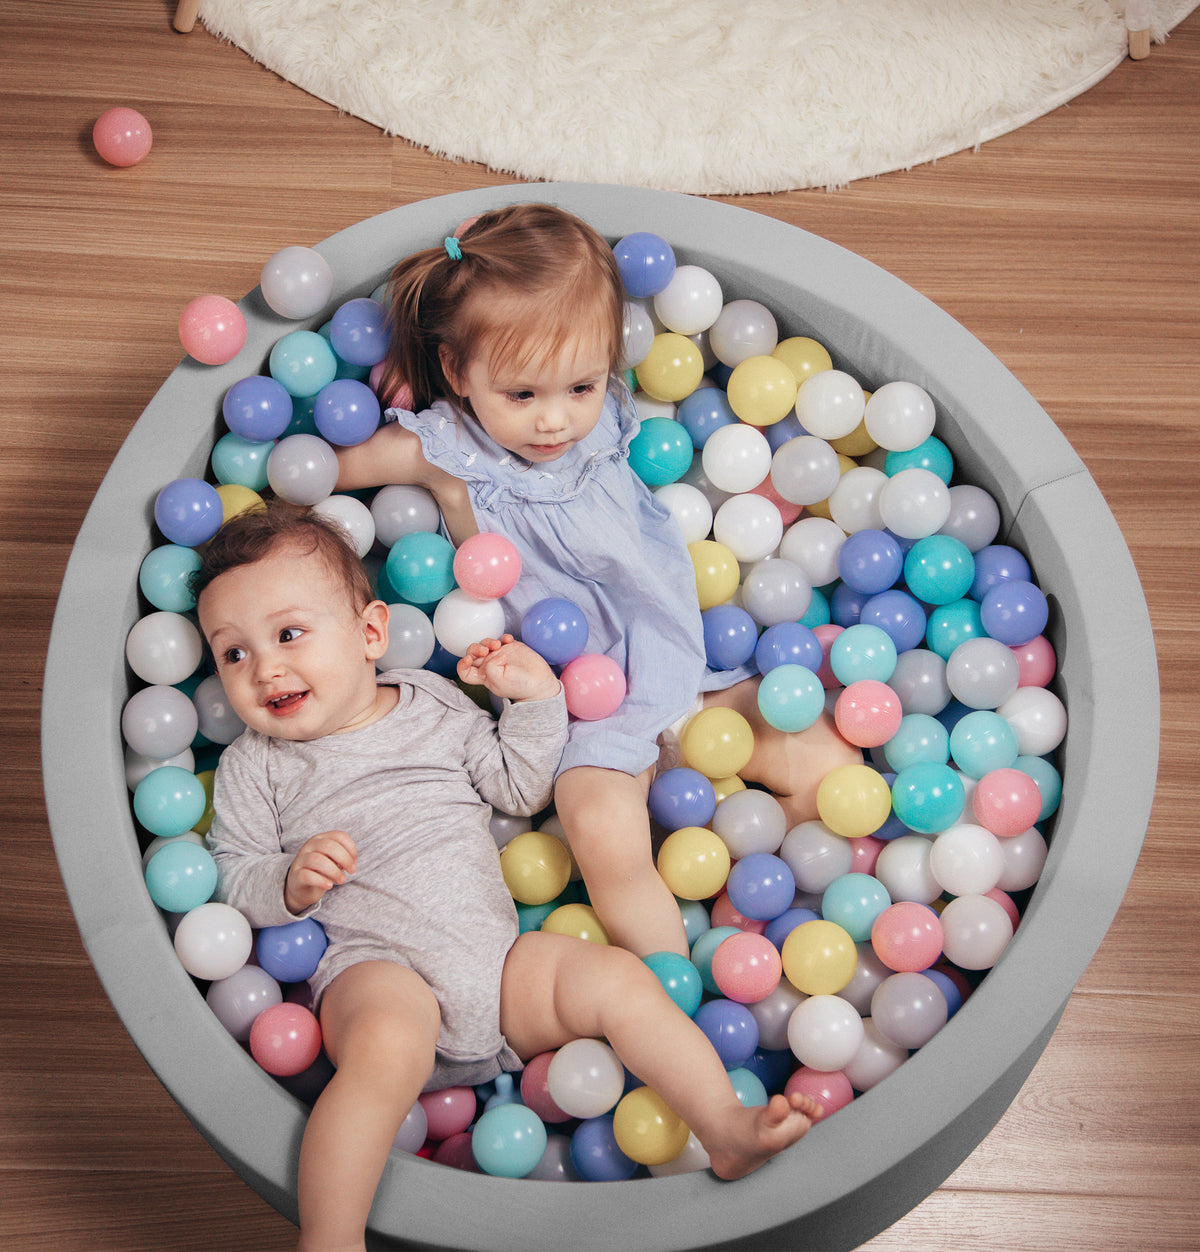 Foam Ball Pit for Toddler Children - (Balls NOT Included) Light Grey